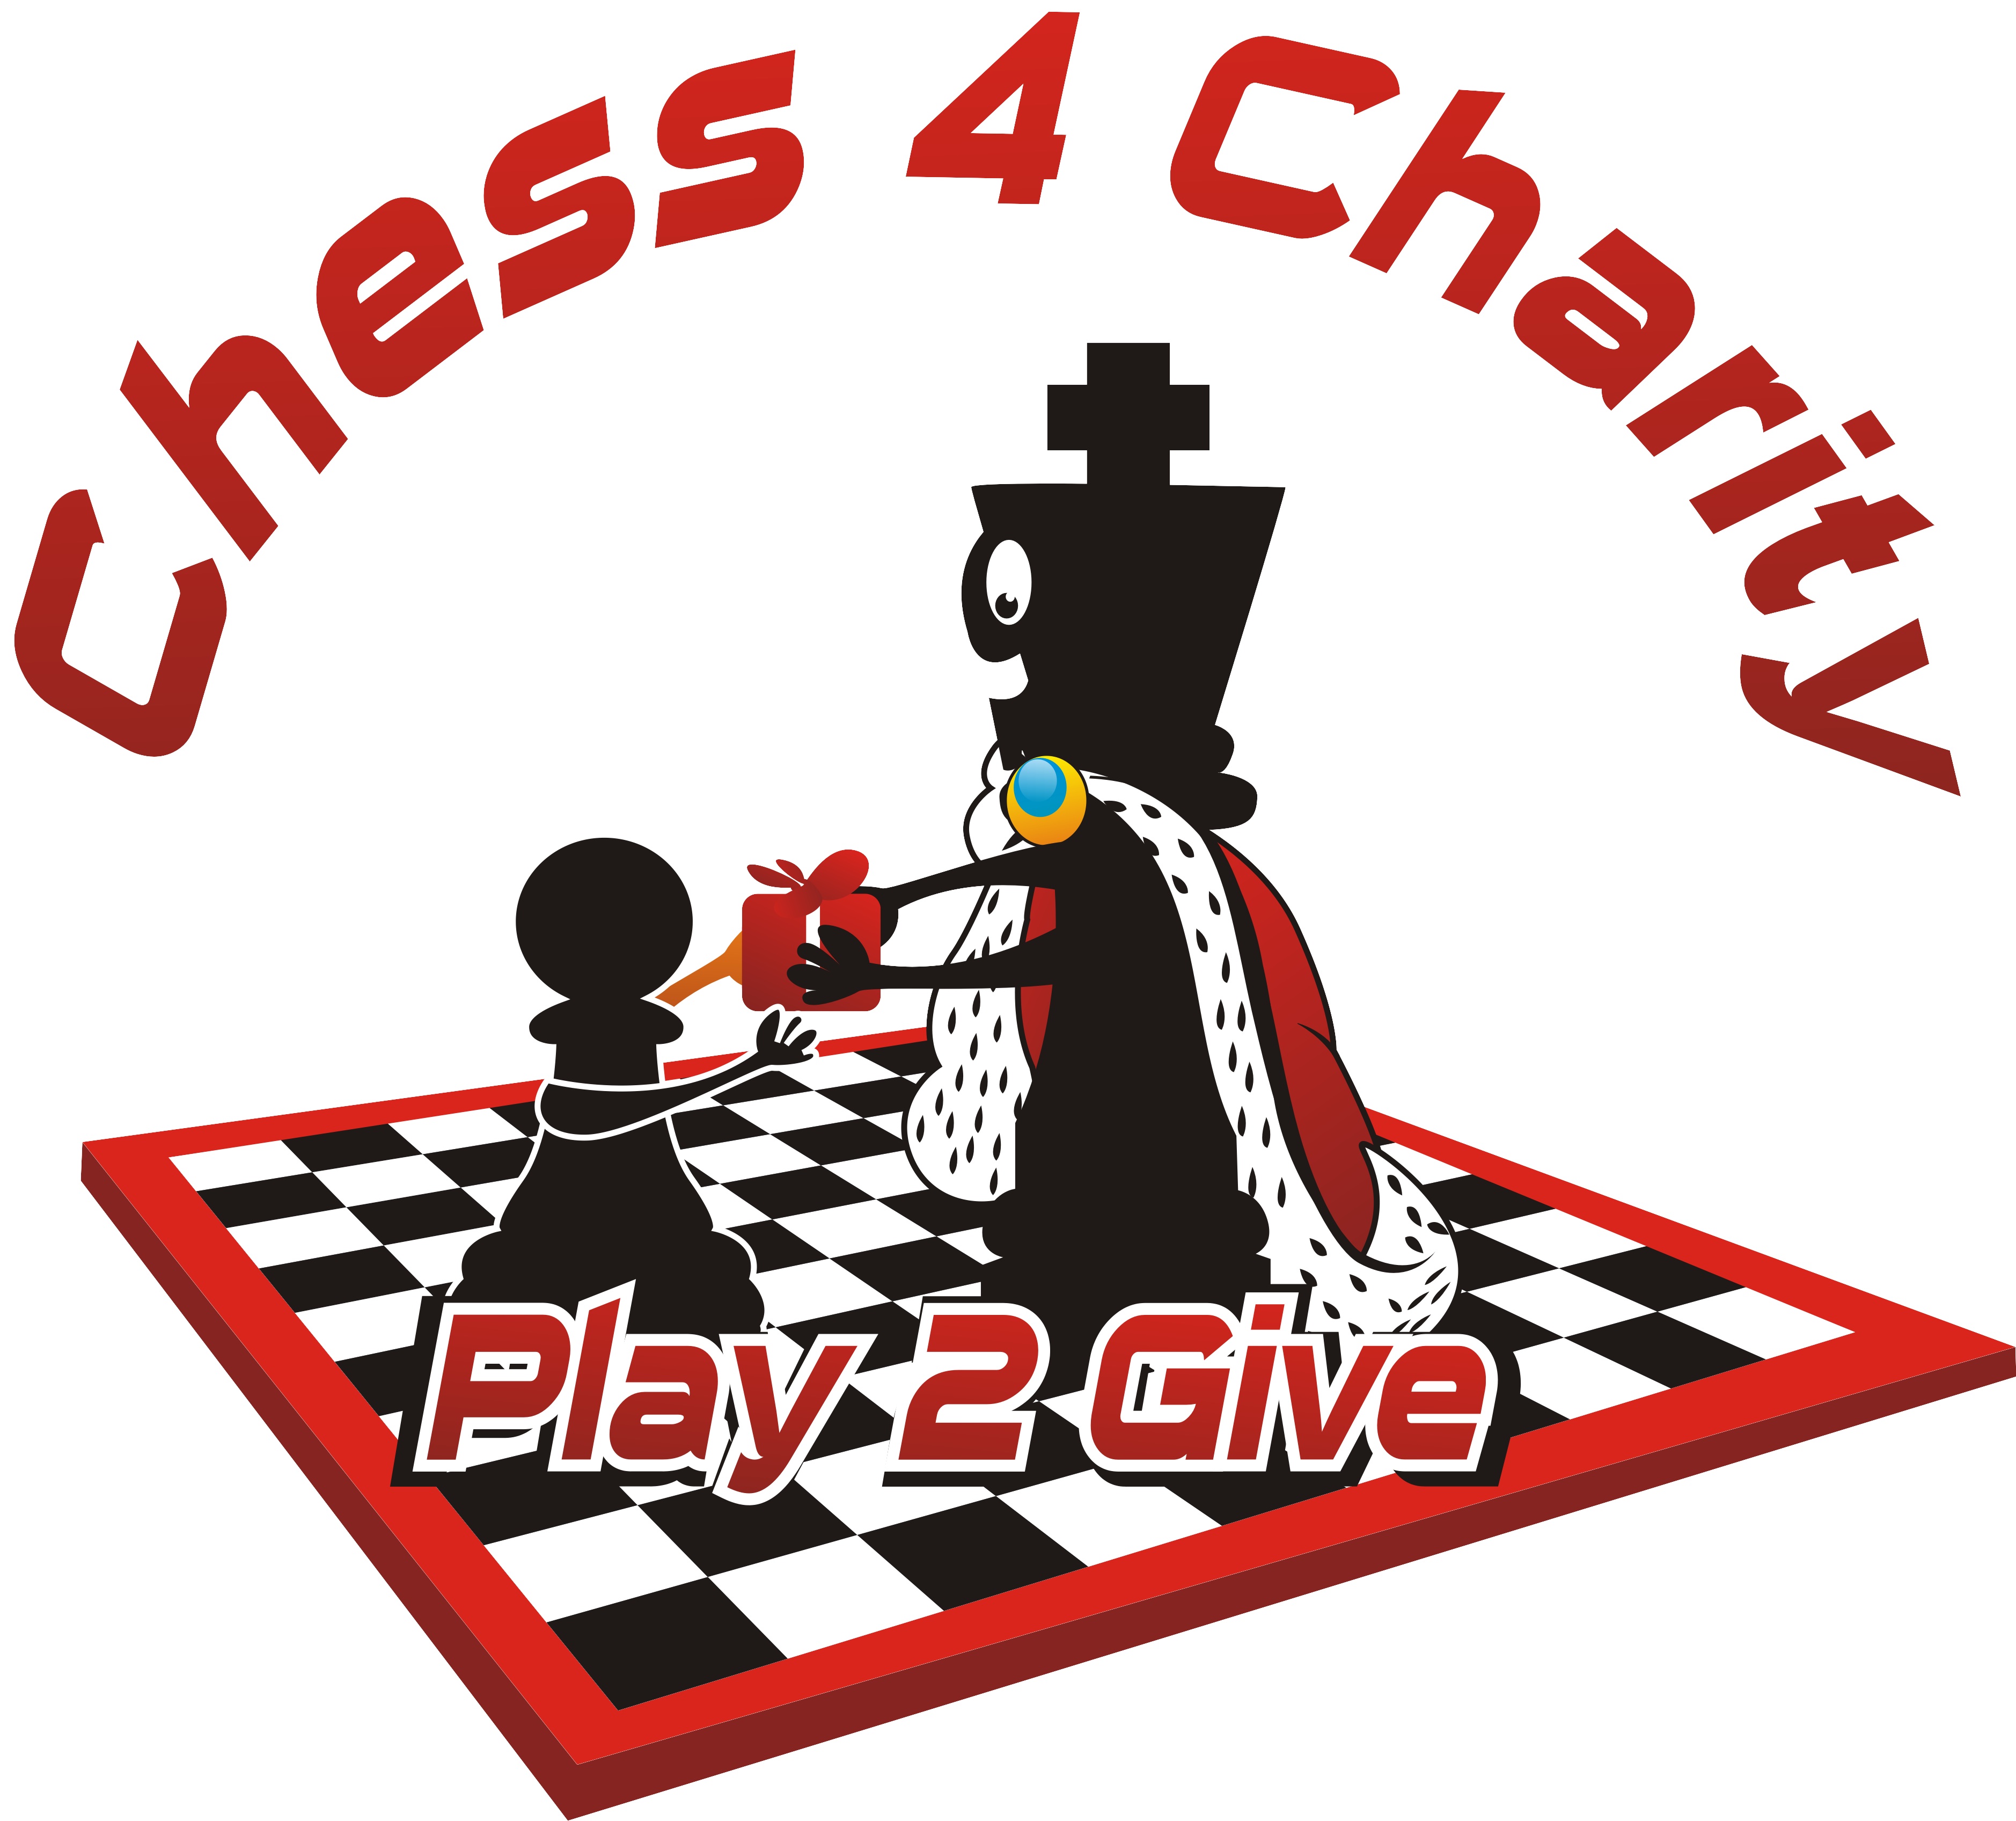 www.chess4charity.com